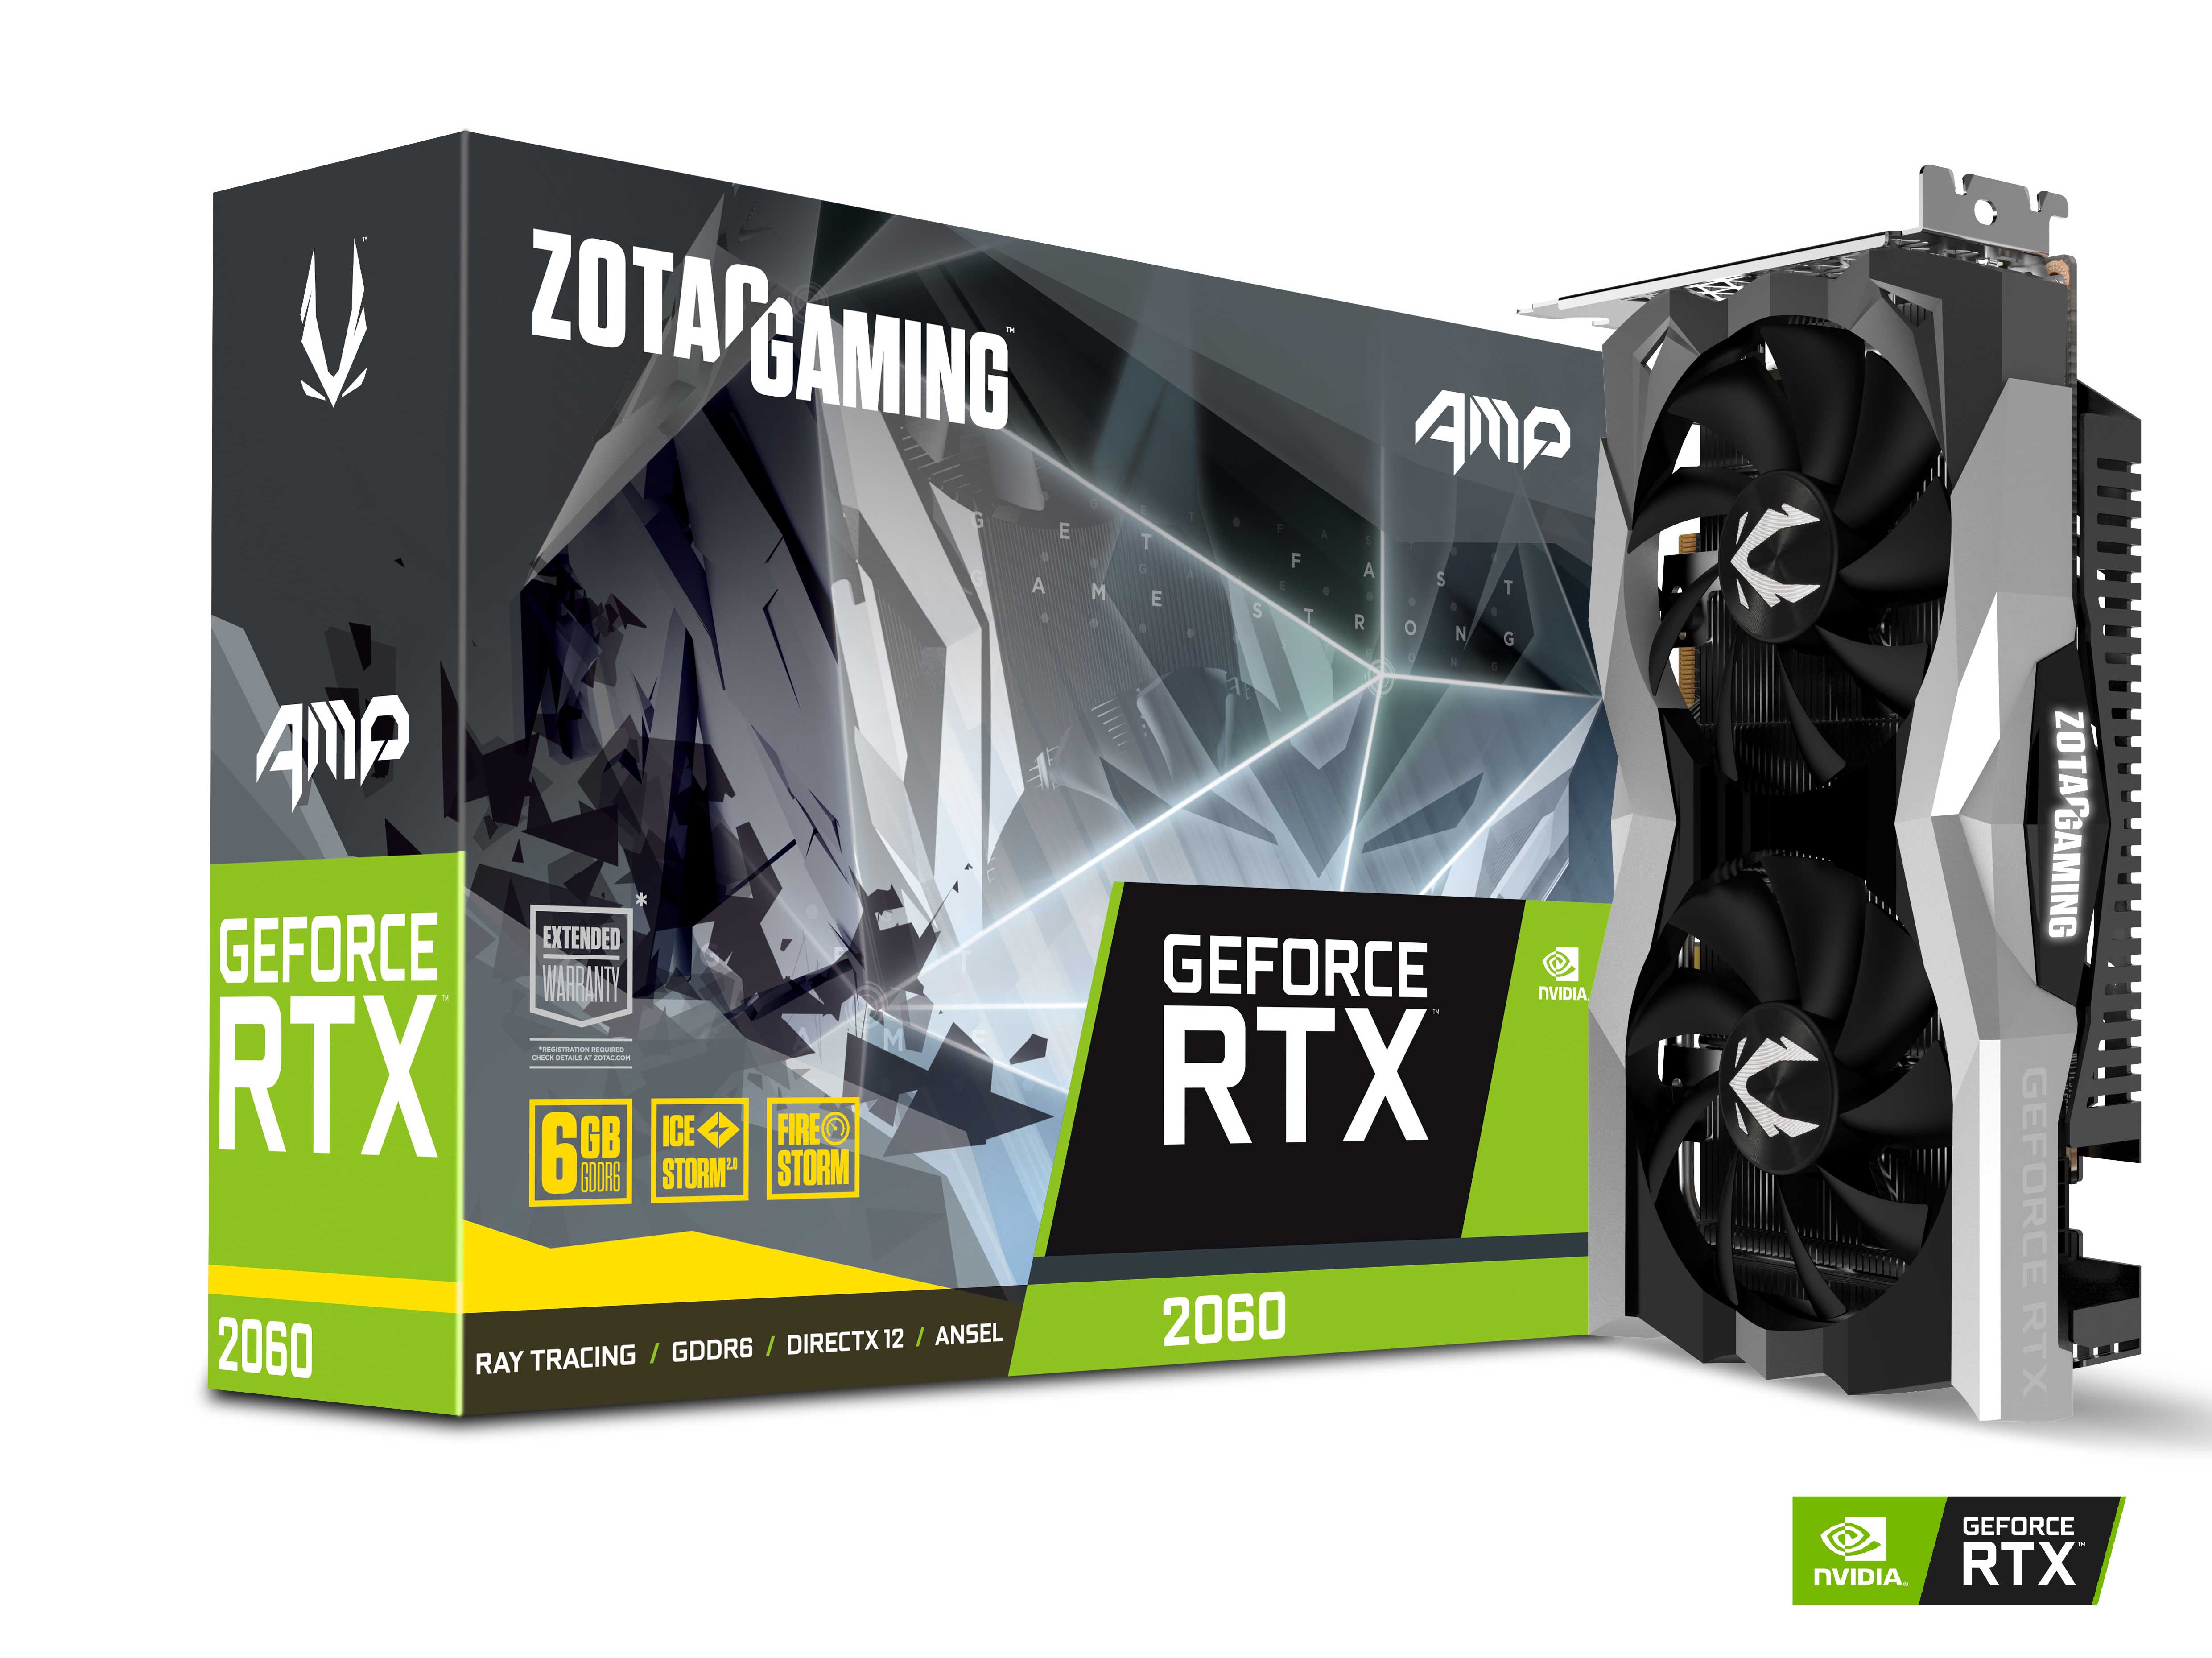 ZOTAC GAMING 推出 GeForce RTX 2060 顯示卡系列 | ZOTAC